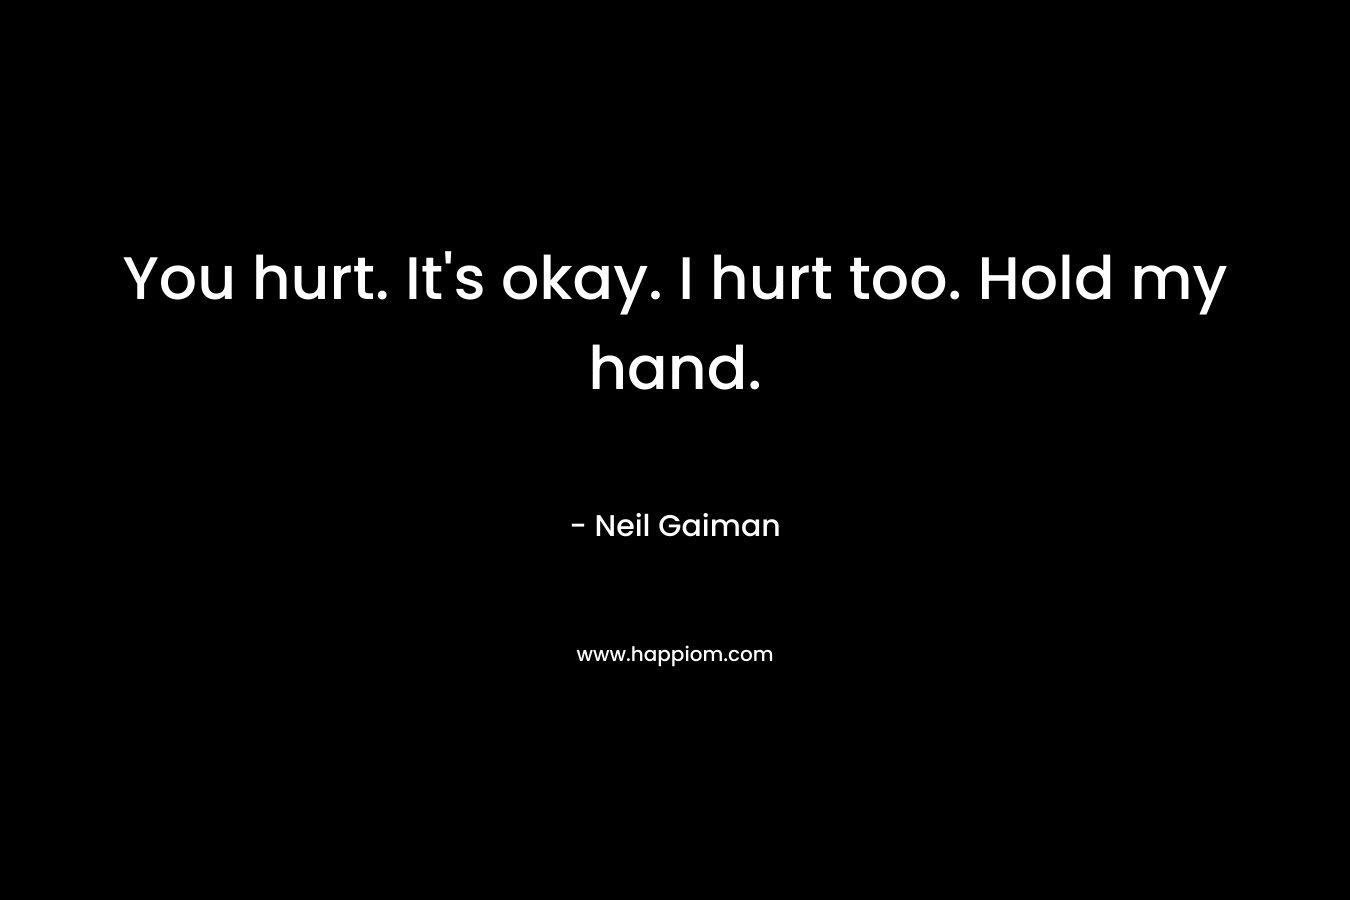 You hurt. It's okay. I hurt too. Hold my hand.